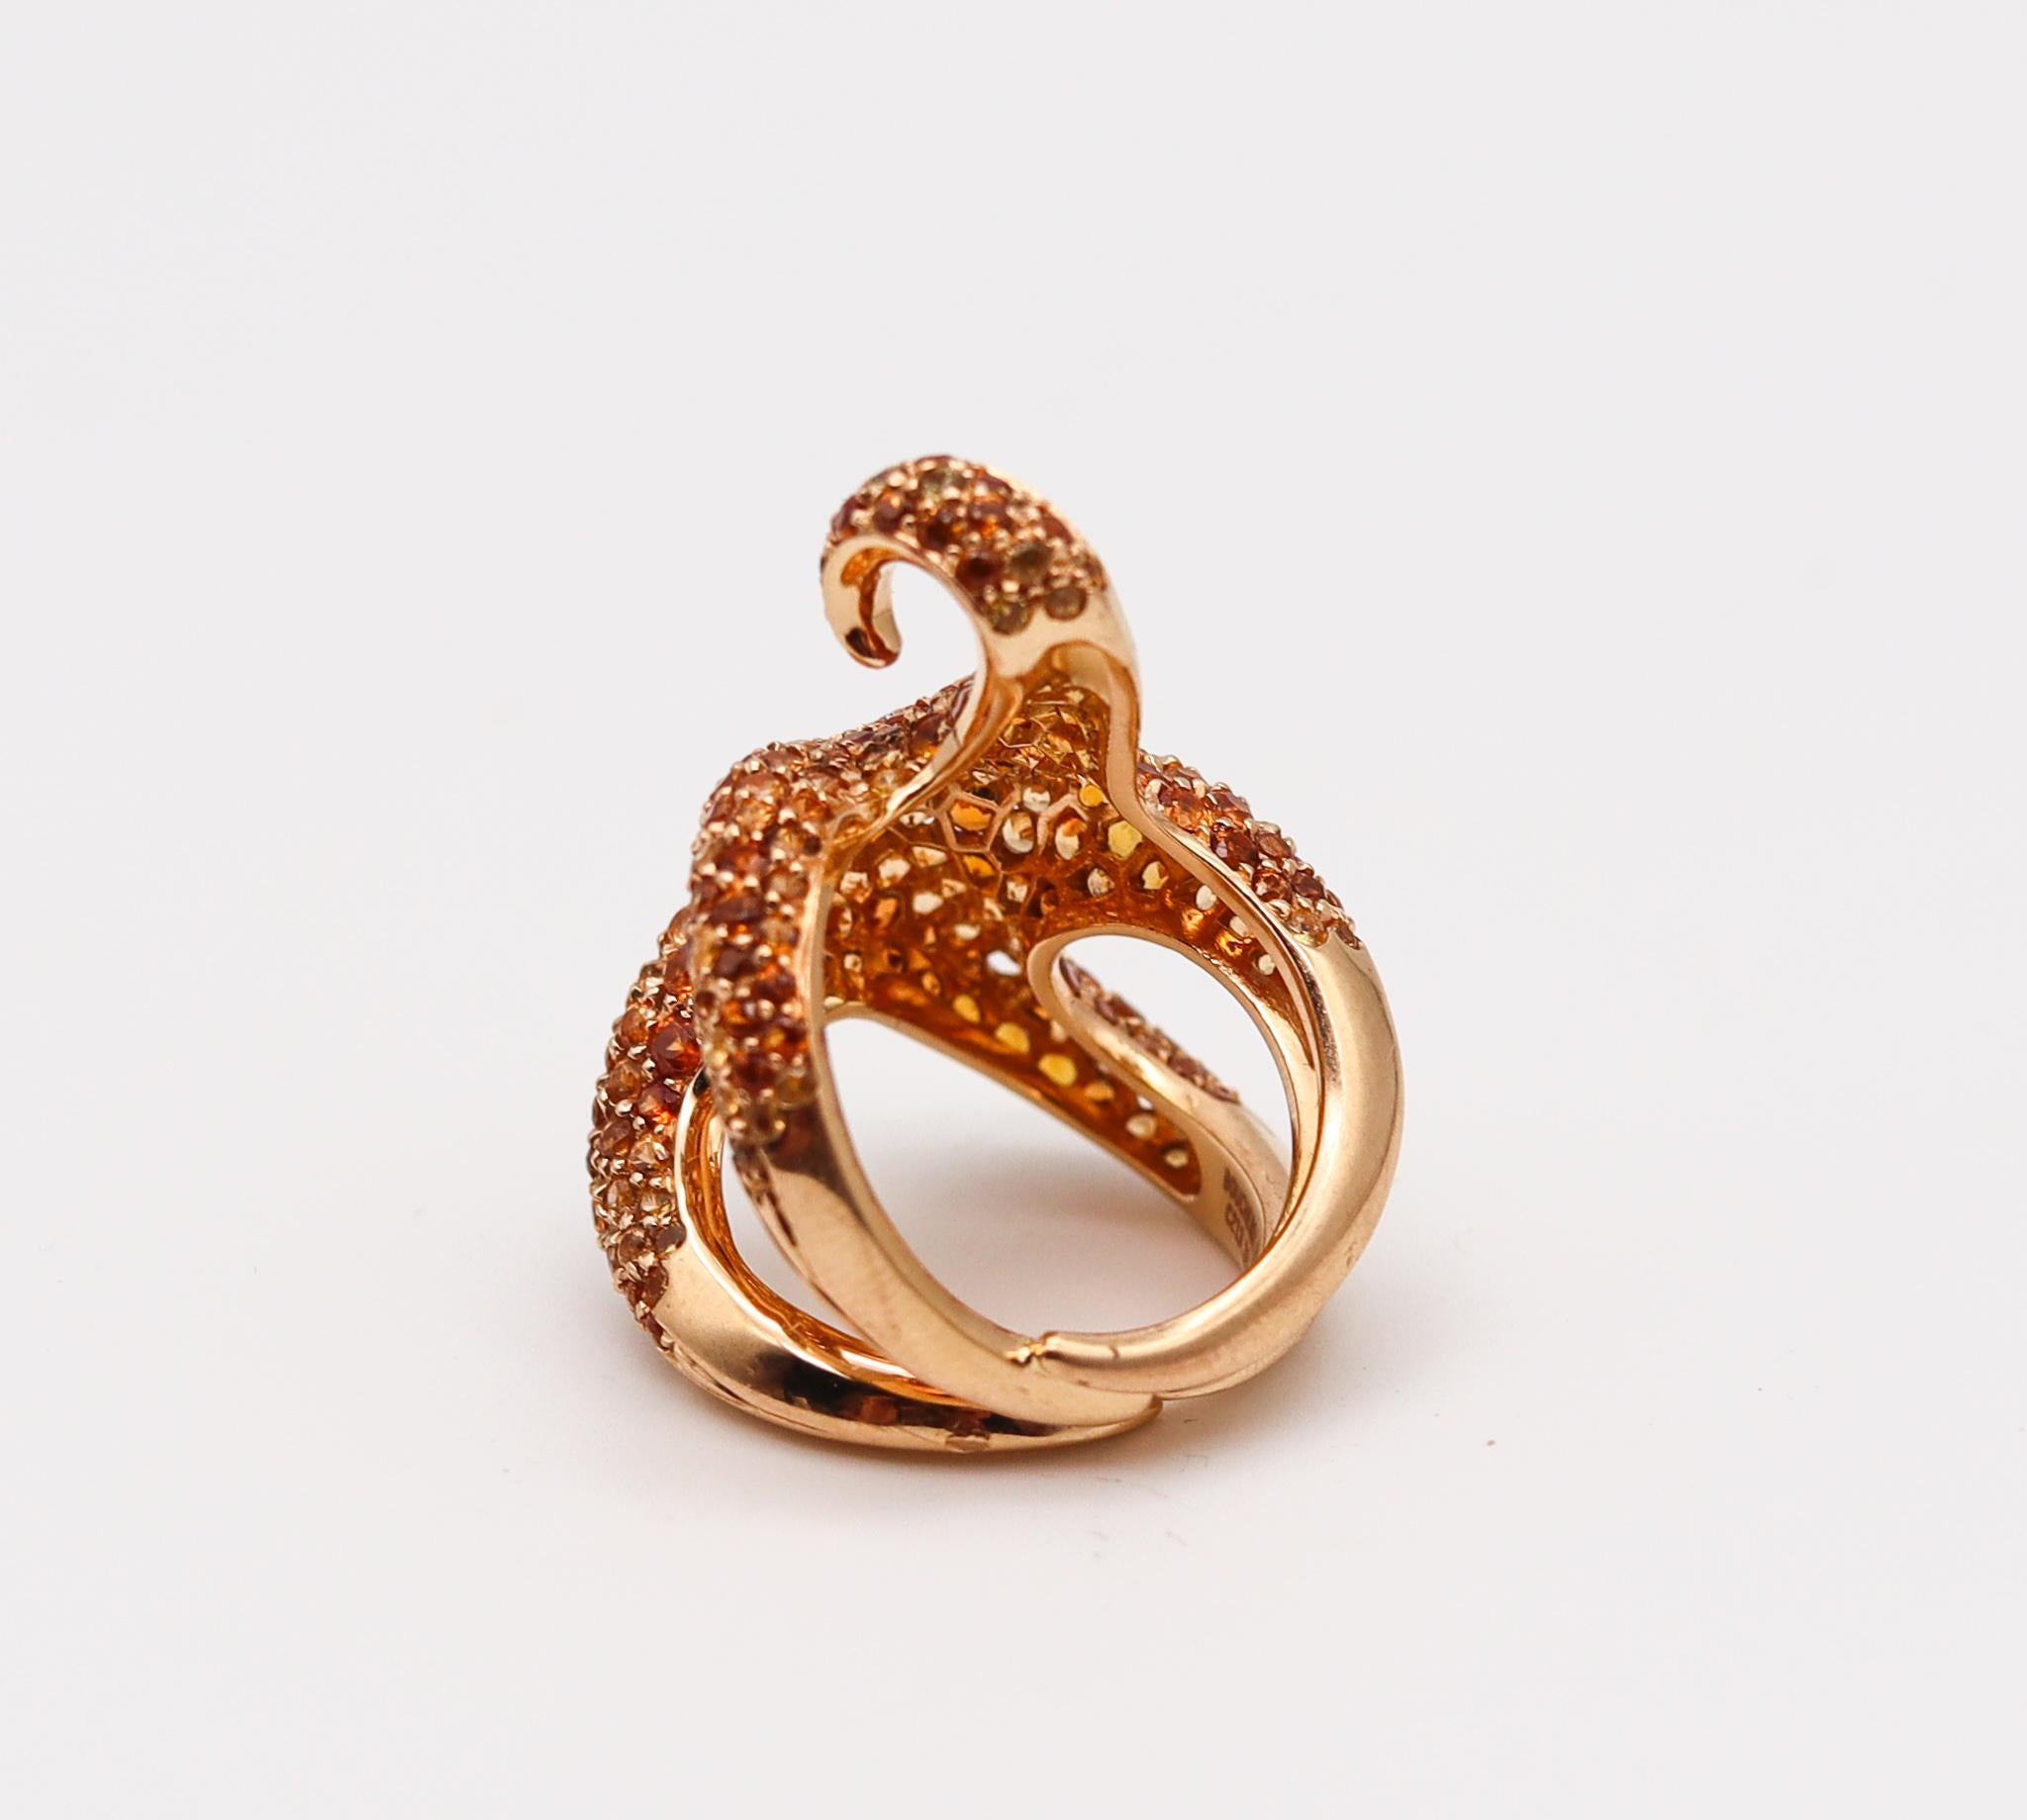 Brilliant Cut Boucheron Paris Sculptural Octopussy Ring 18Kt Yellow Gold with 10.71 Ctw Gems